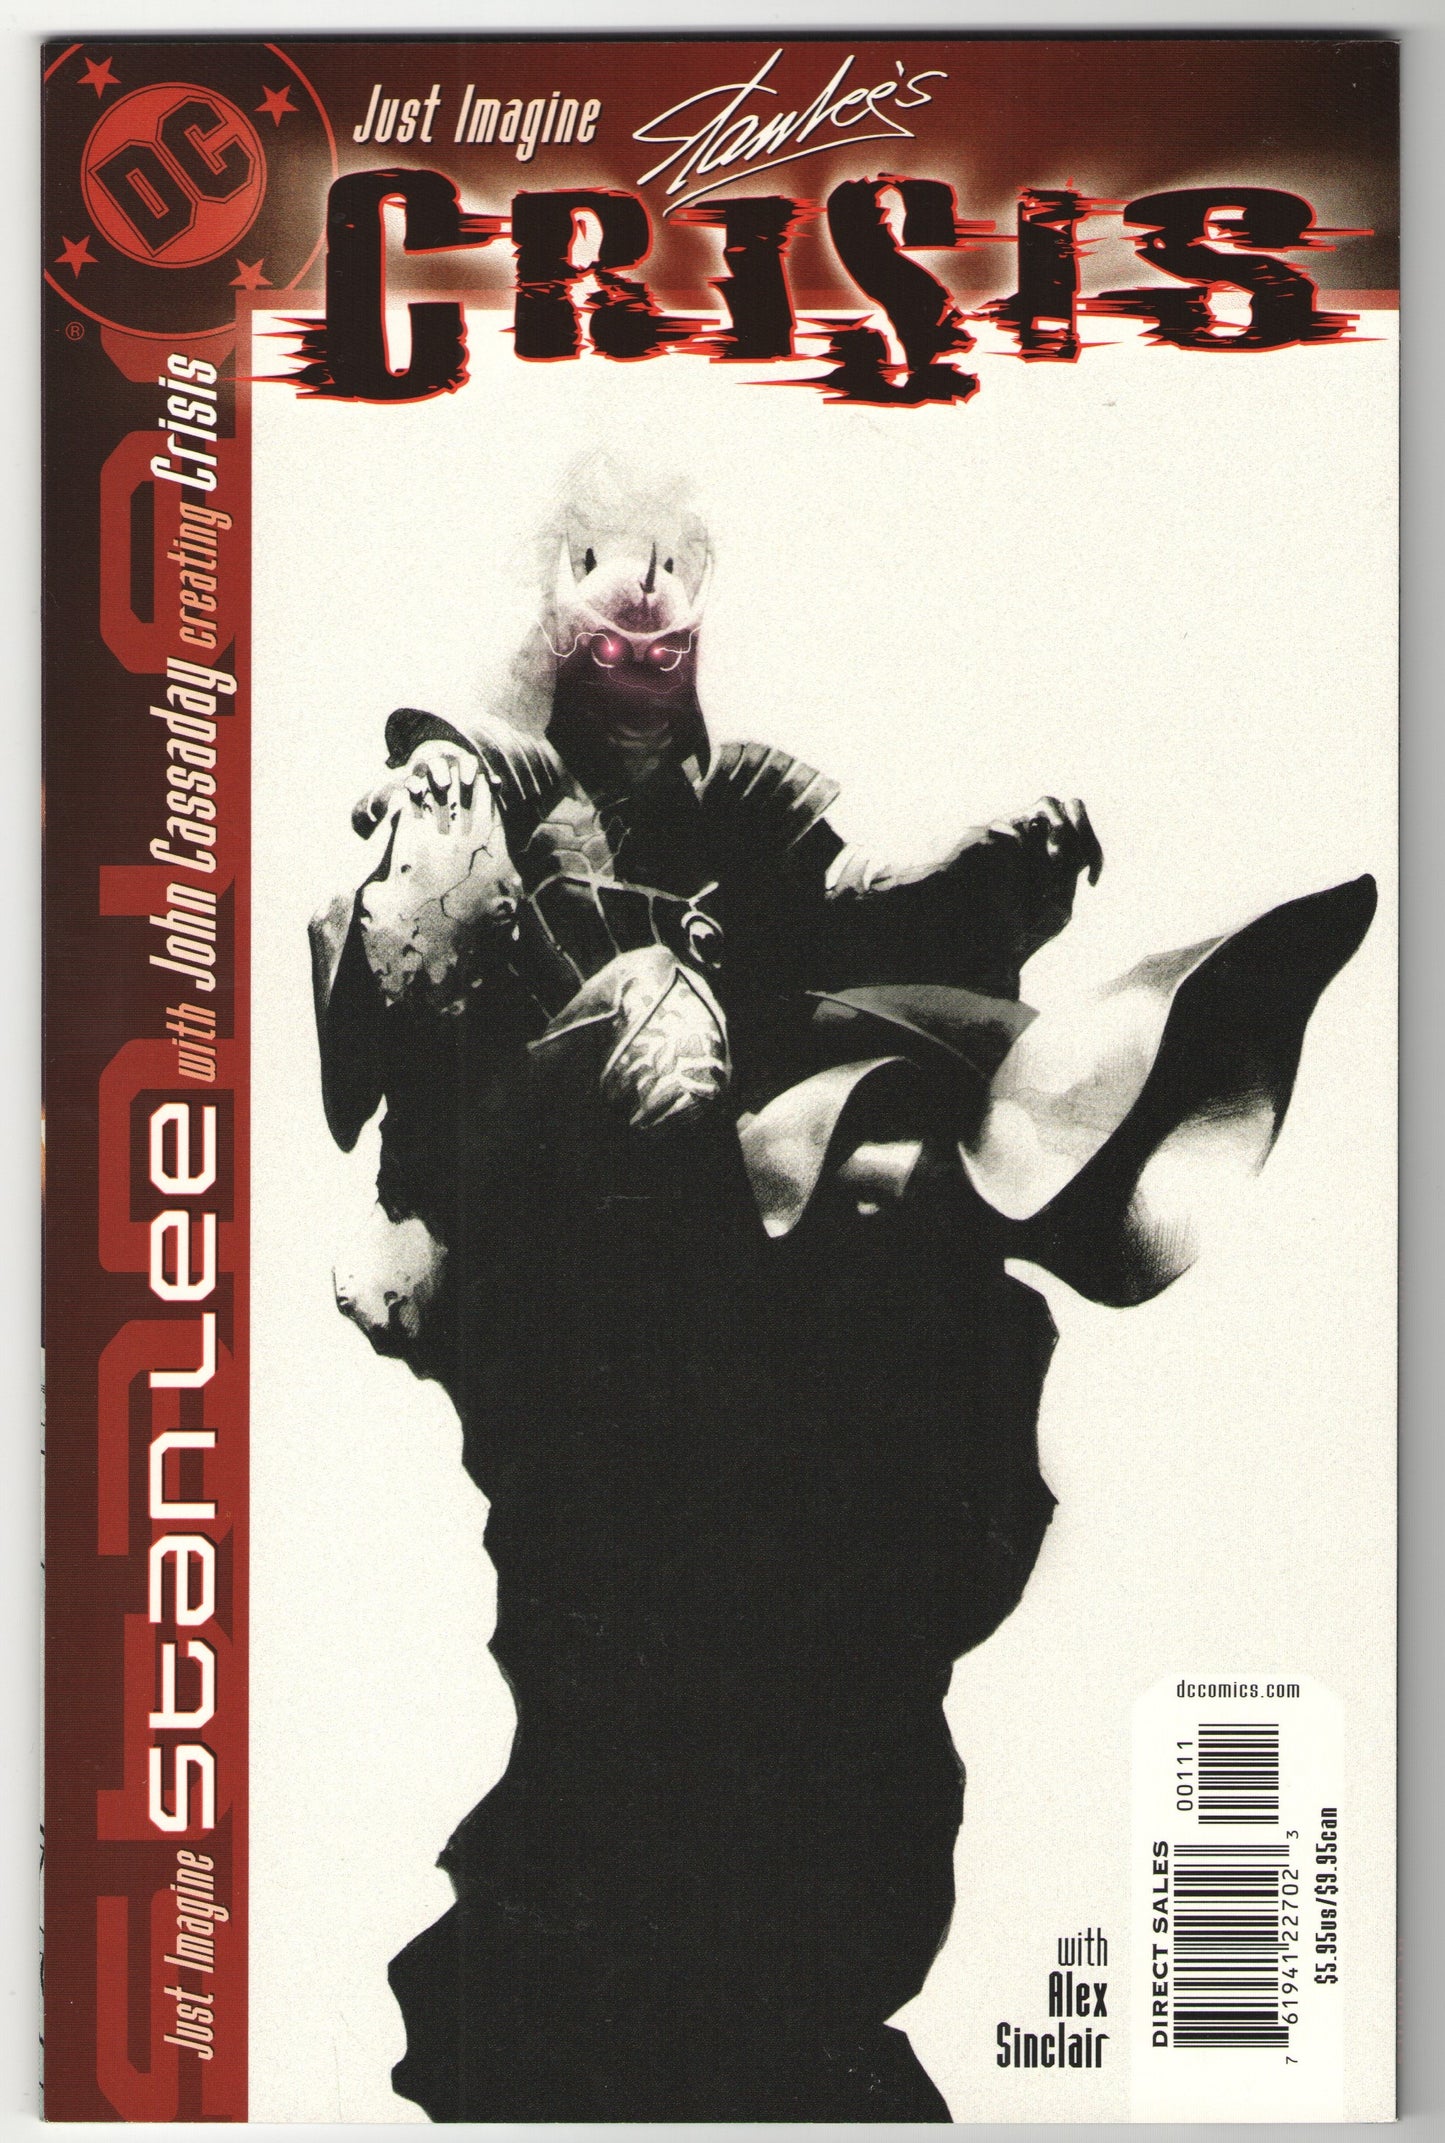 Just Imagine Stan Lee DC Universe One-Shots (2001-2002) 12-Issue Bundle